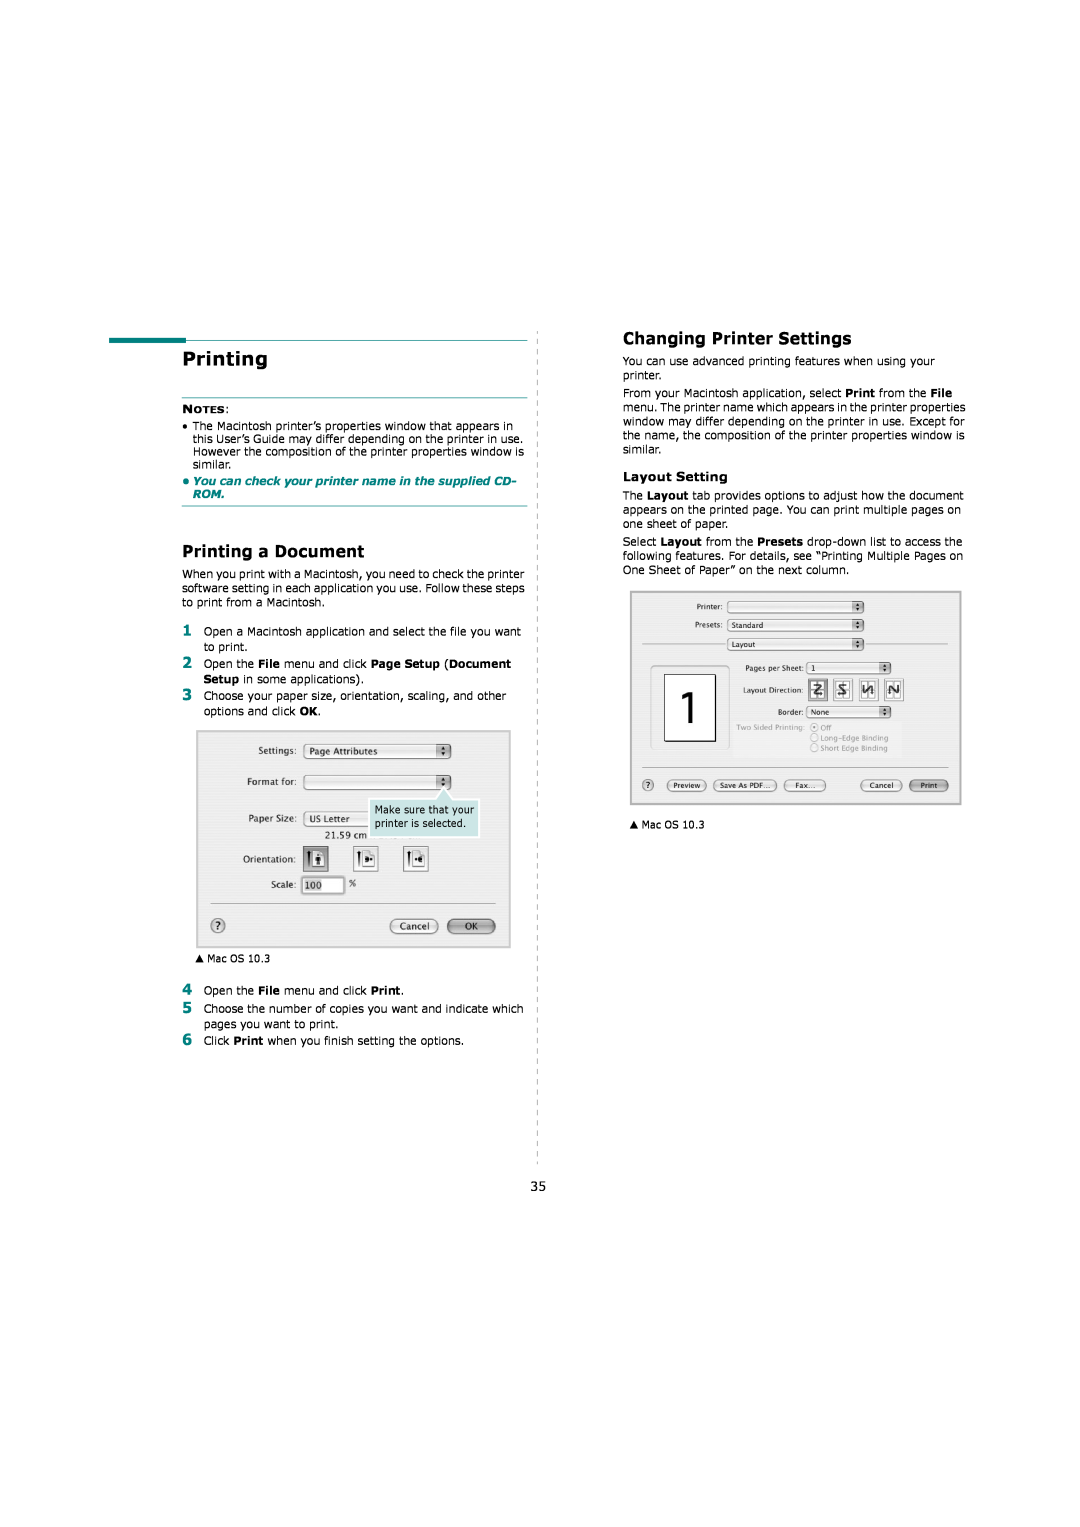 Samsung ML-4551ND, ML-4550 manual Printing a Document, Changing Printer Settings, Layout Setting 